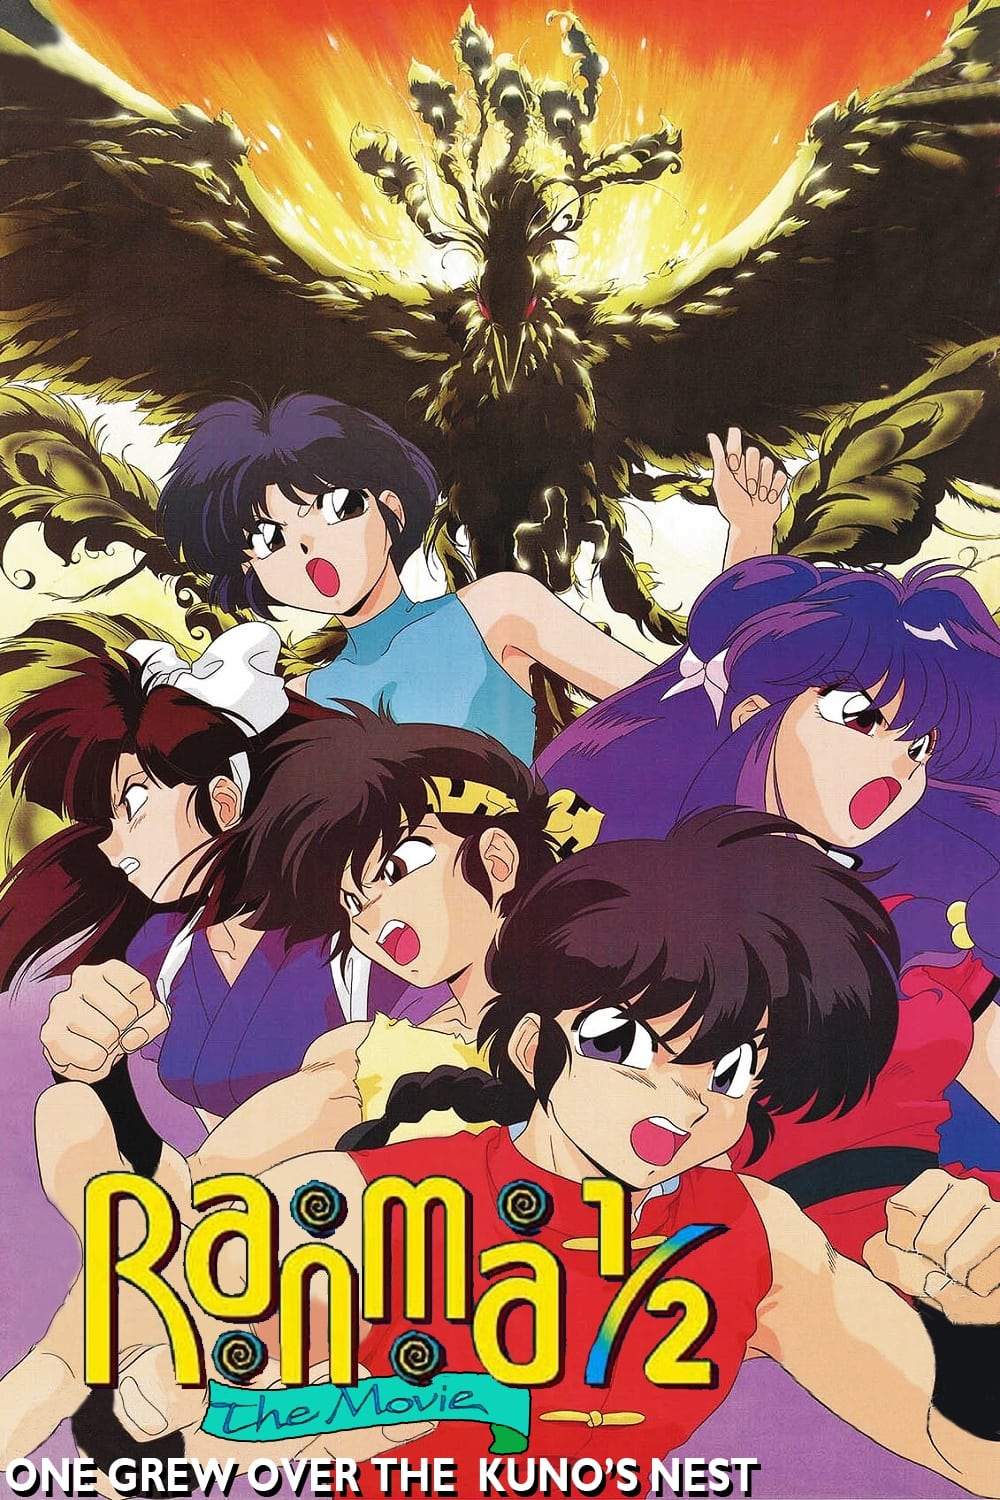 Ranma ½: The Movie 3 — The Super Non-Discriminatory Showdown: Team Ranma vs. the Legendary Phoenix (1994)